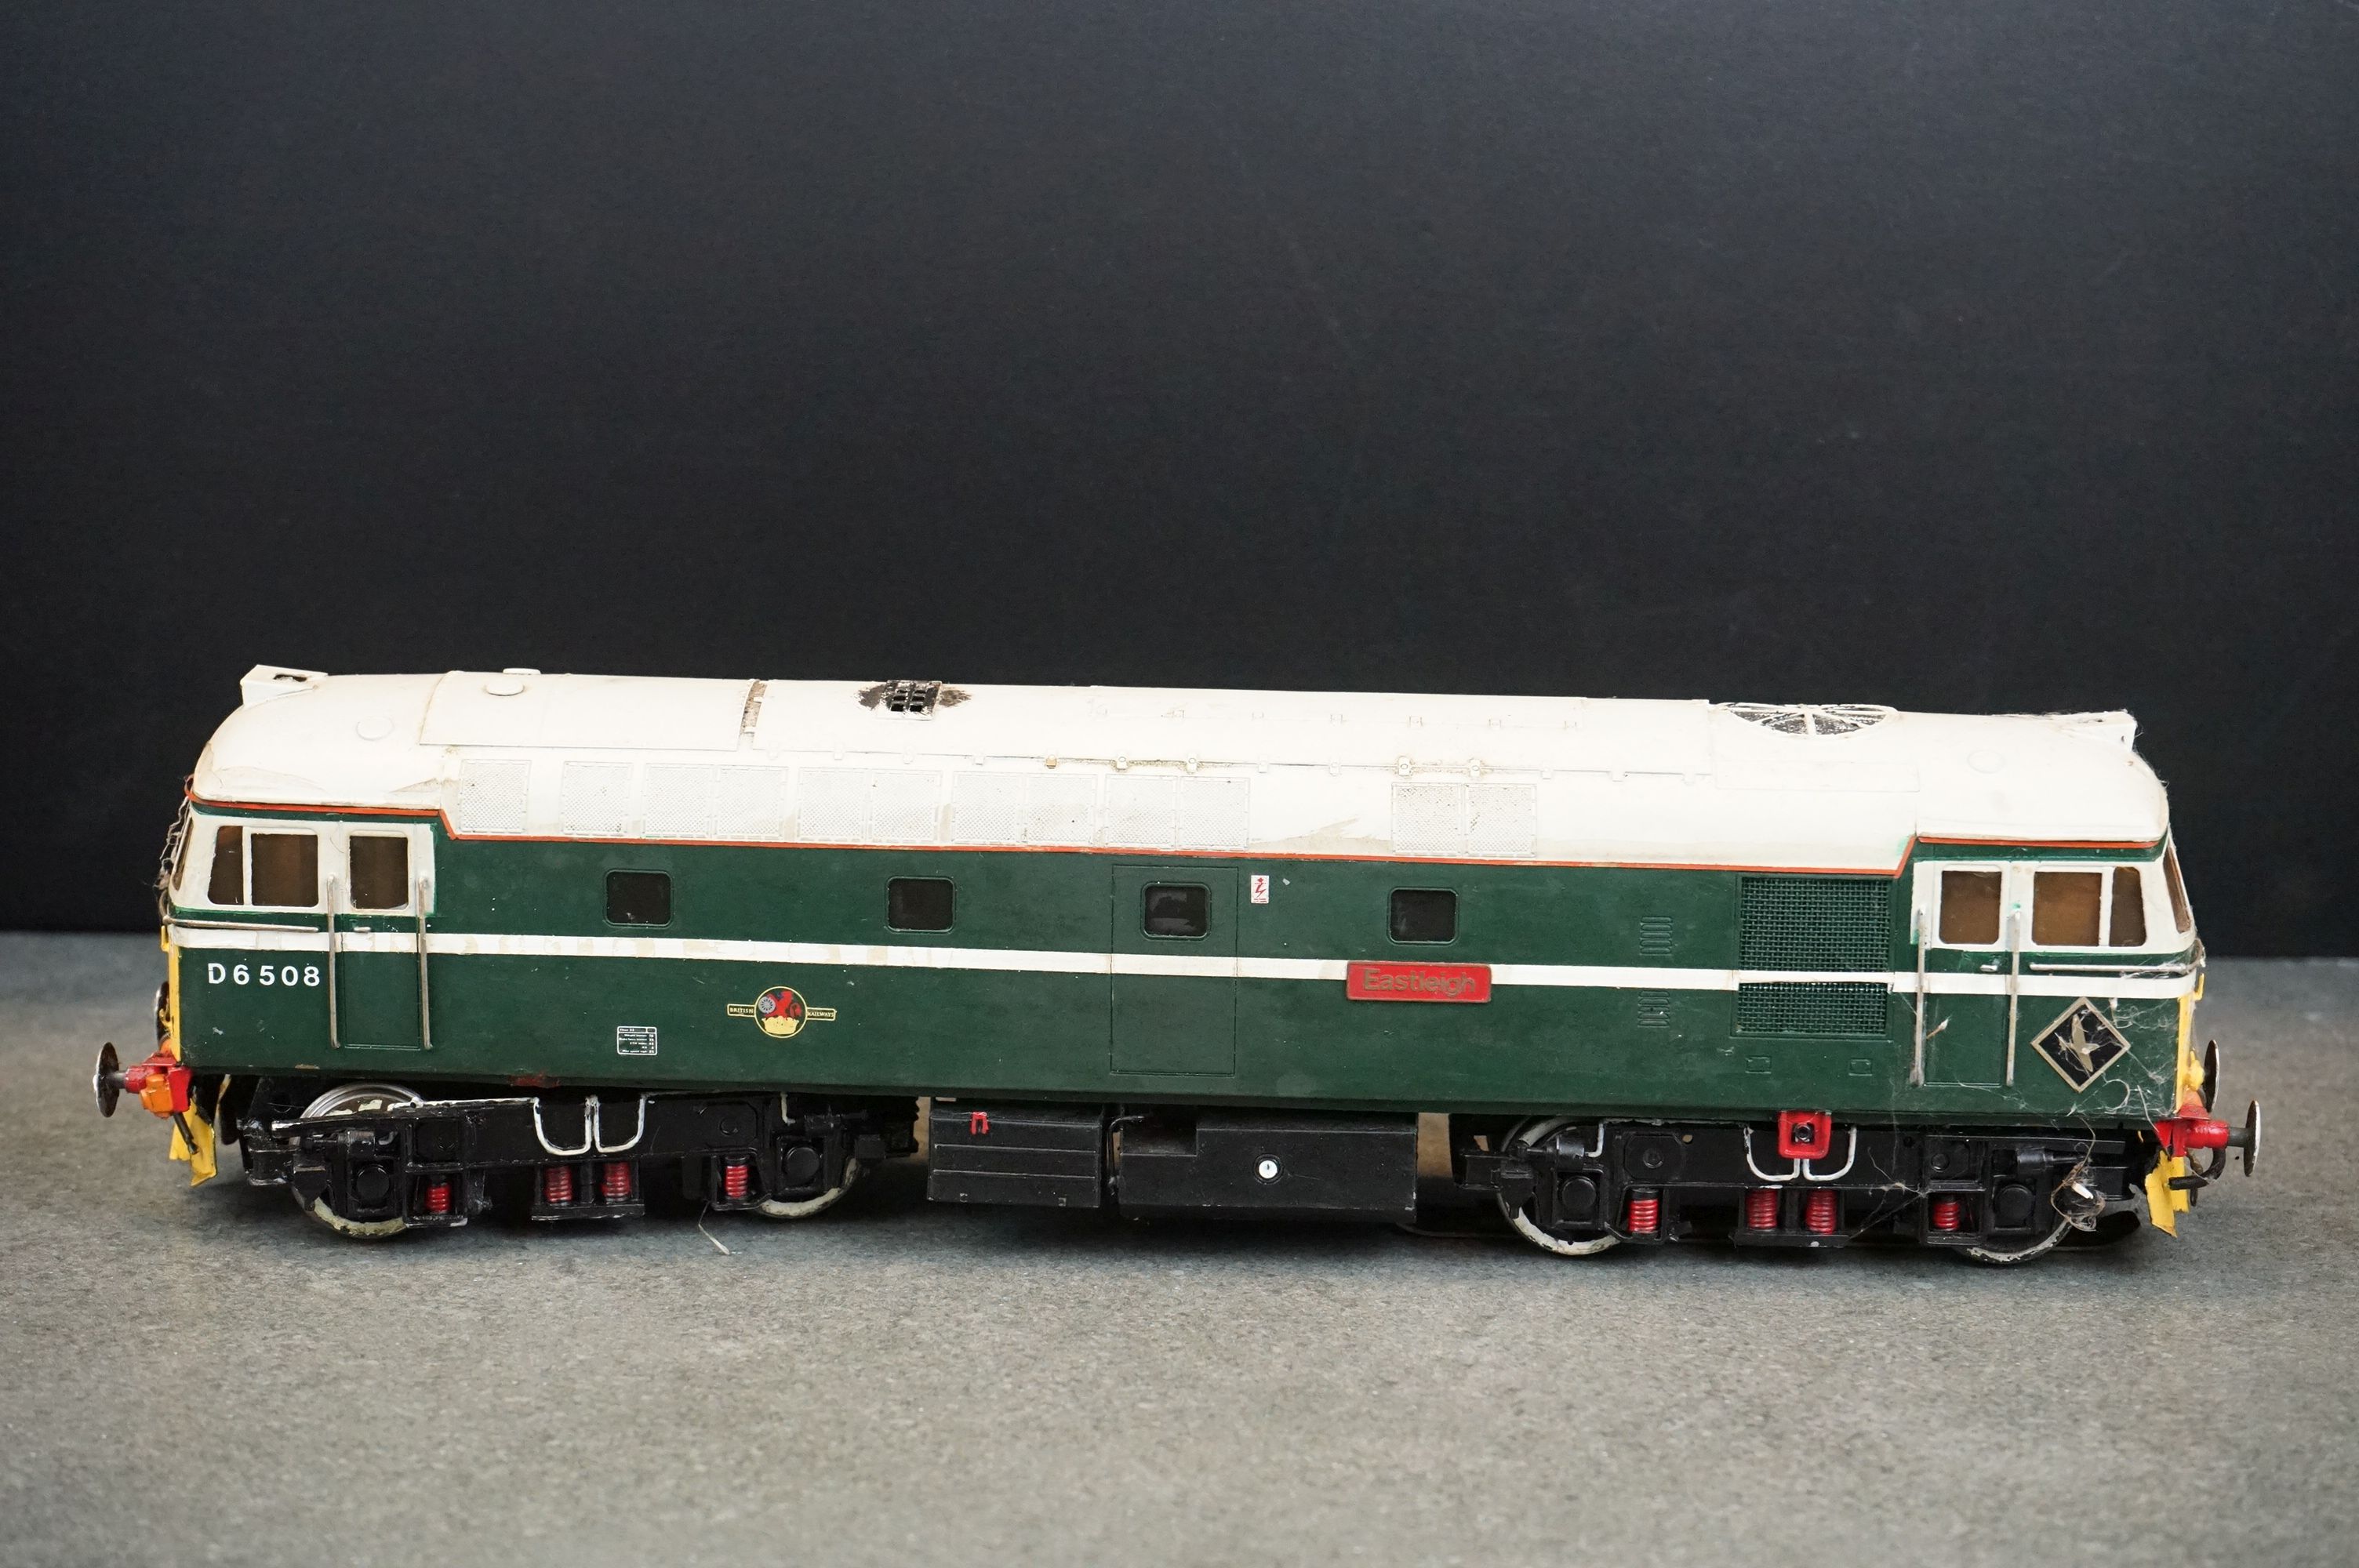 Kit built O gauge D6508 Eastleigh BR Diesel locomotive in green livery, metal construction, - Image 3 of 6